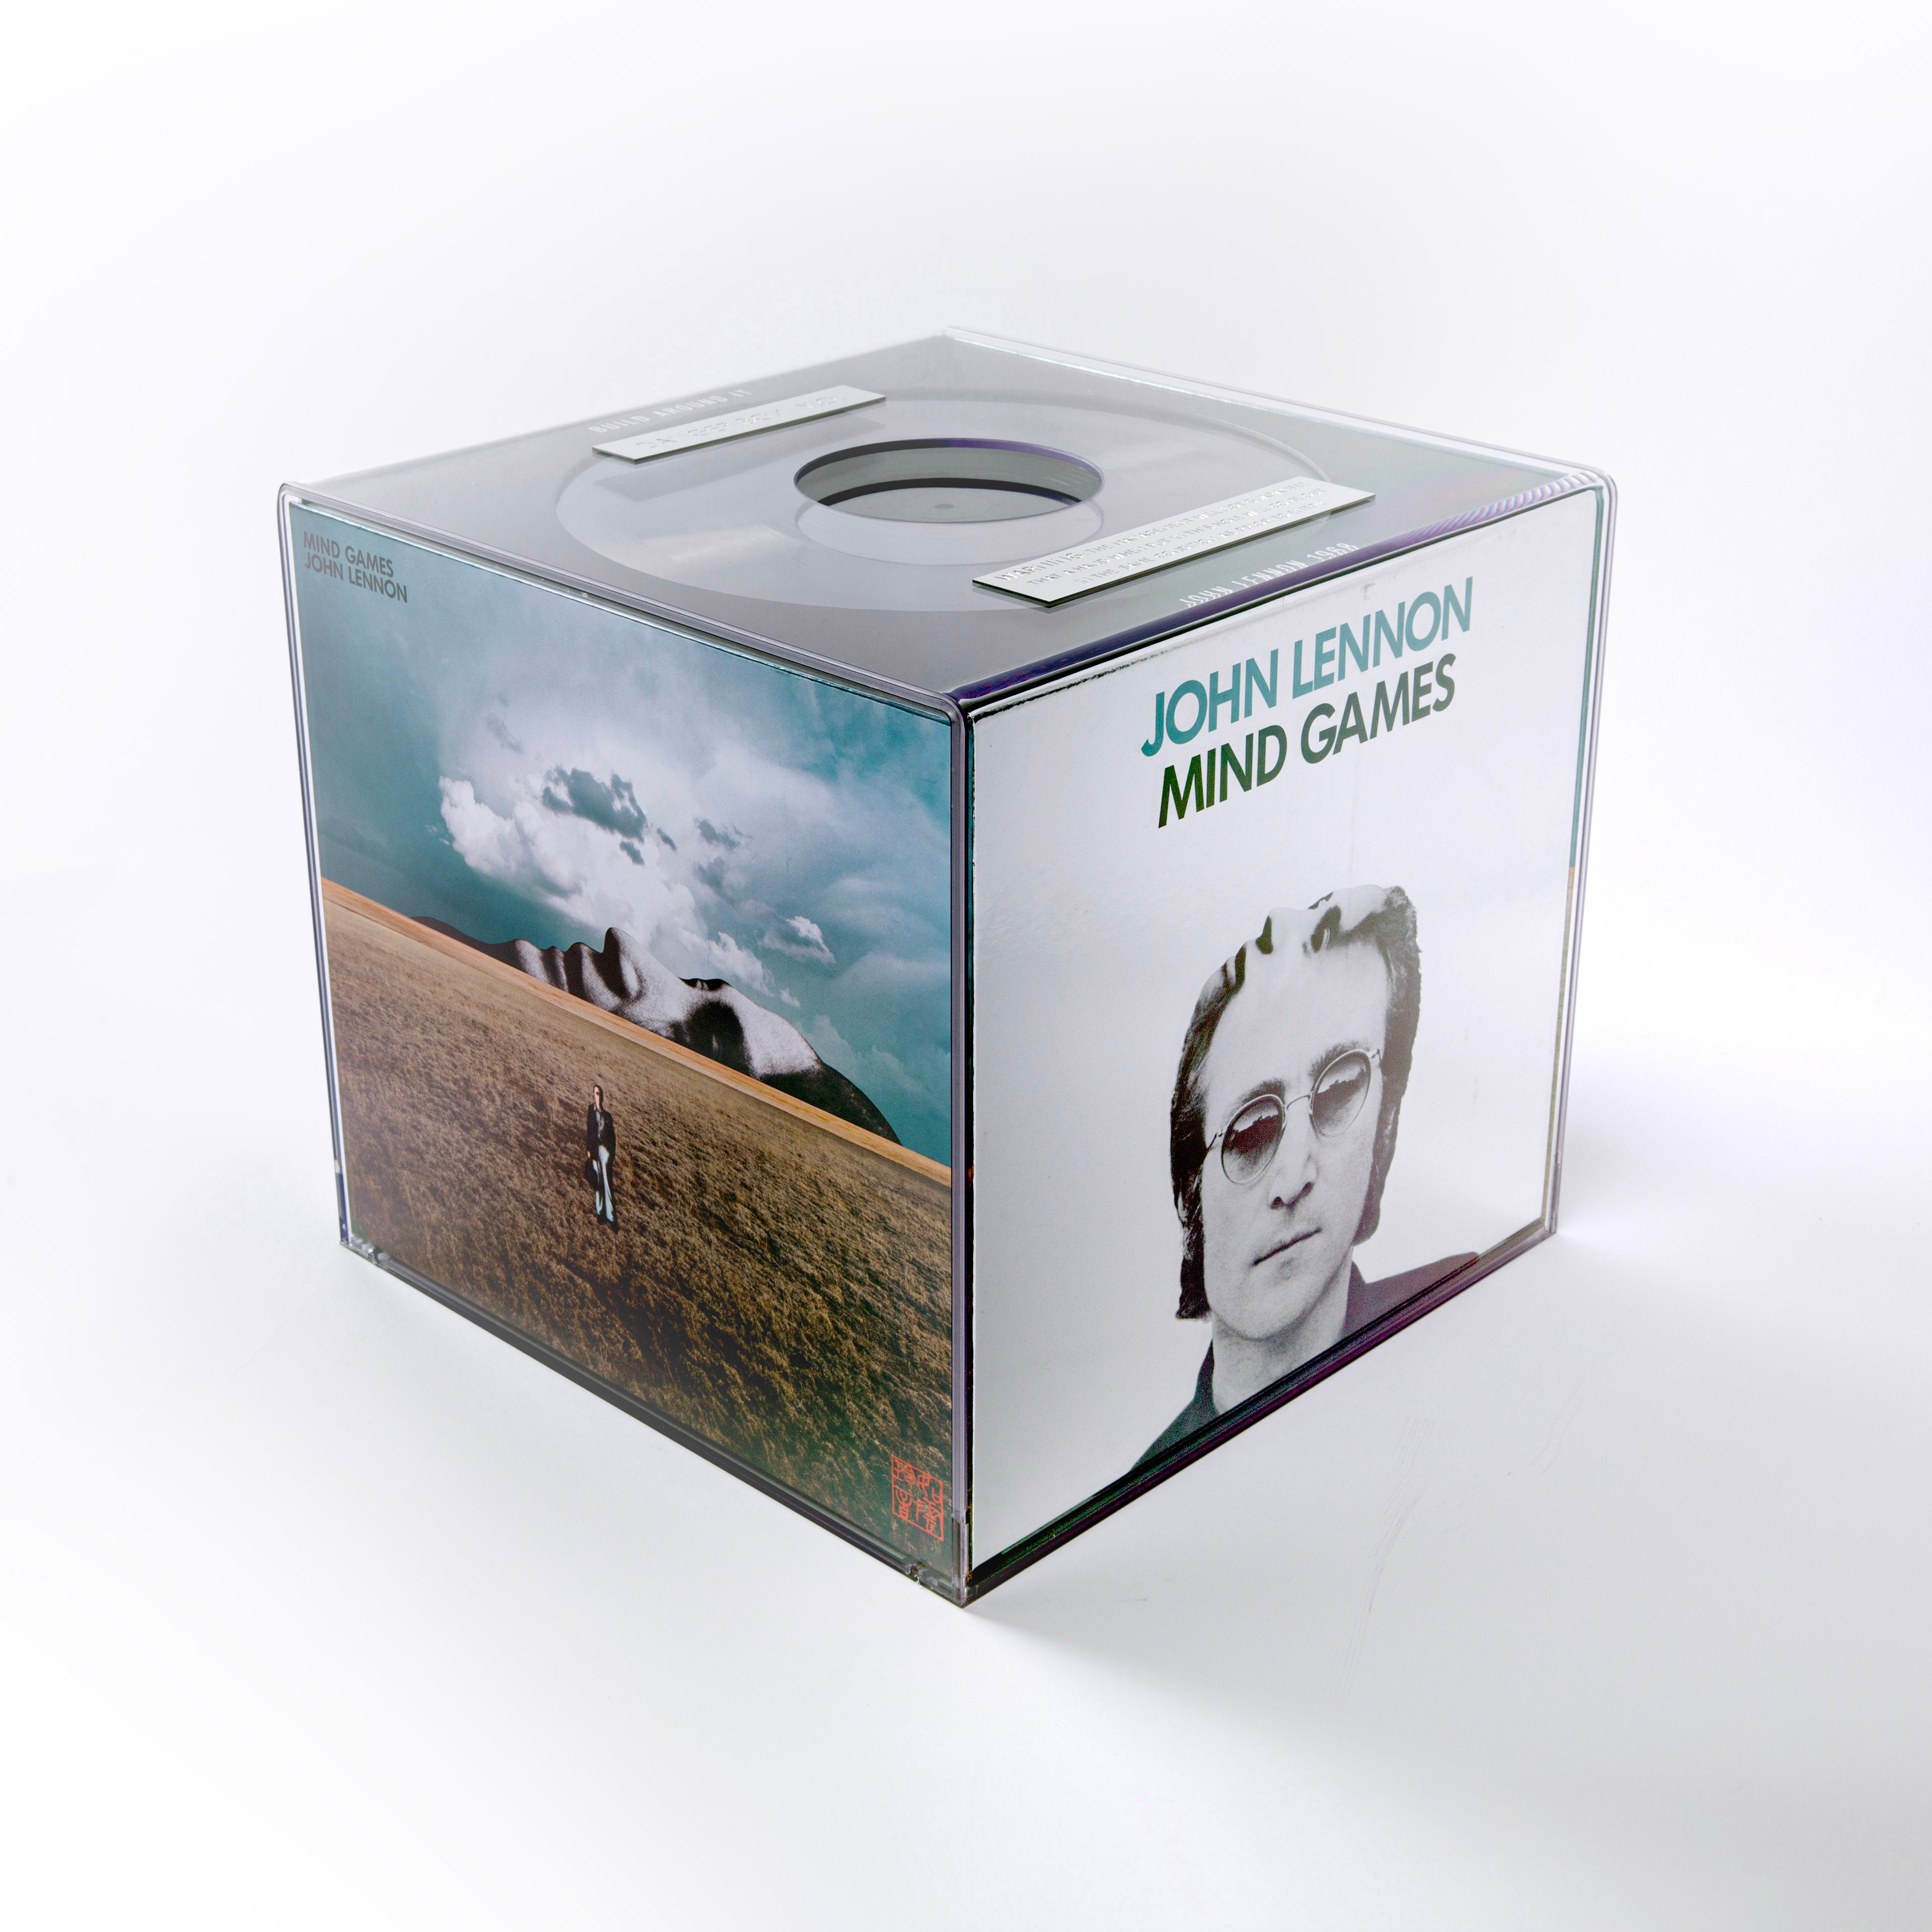 John Lennon, Yoko Ono - Mind Games (The Ultimate Mixes): Super Deluxe Box Set